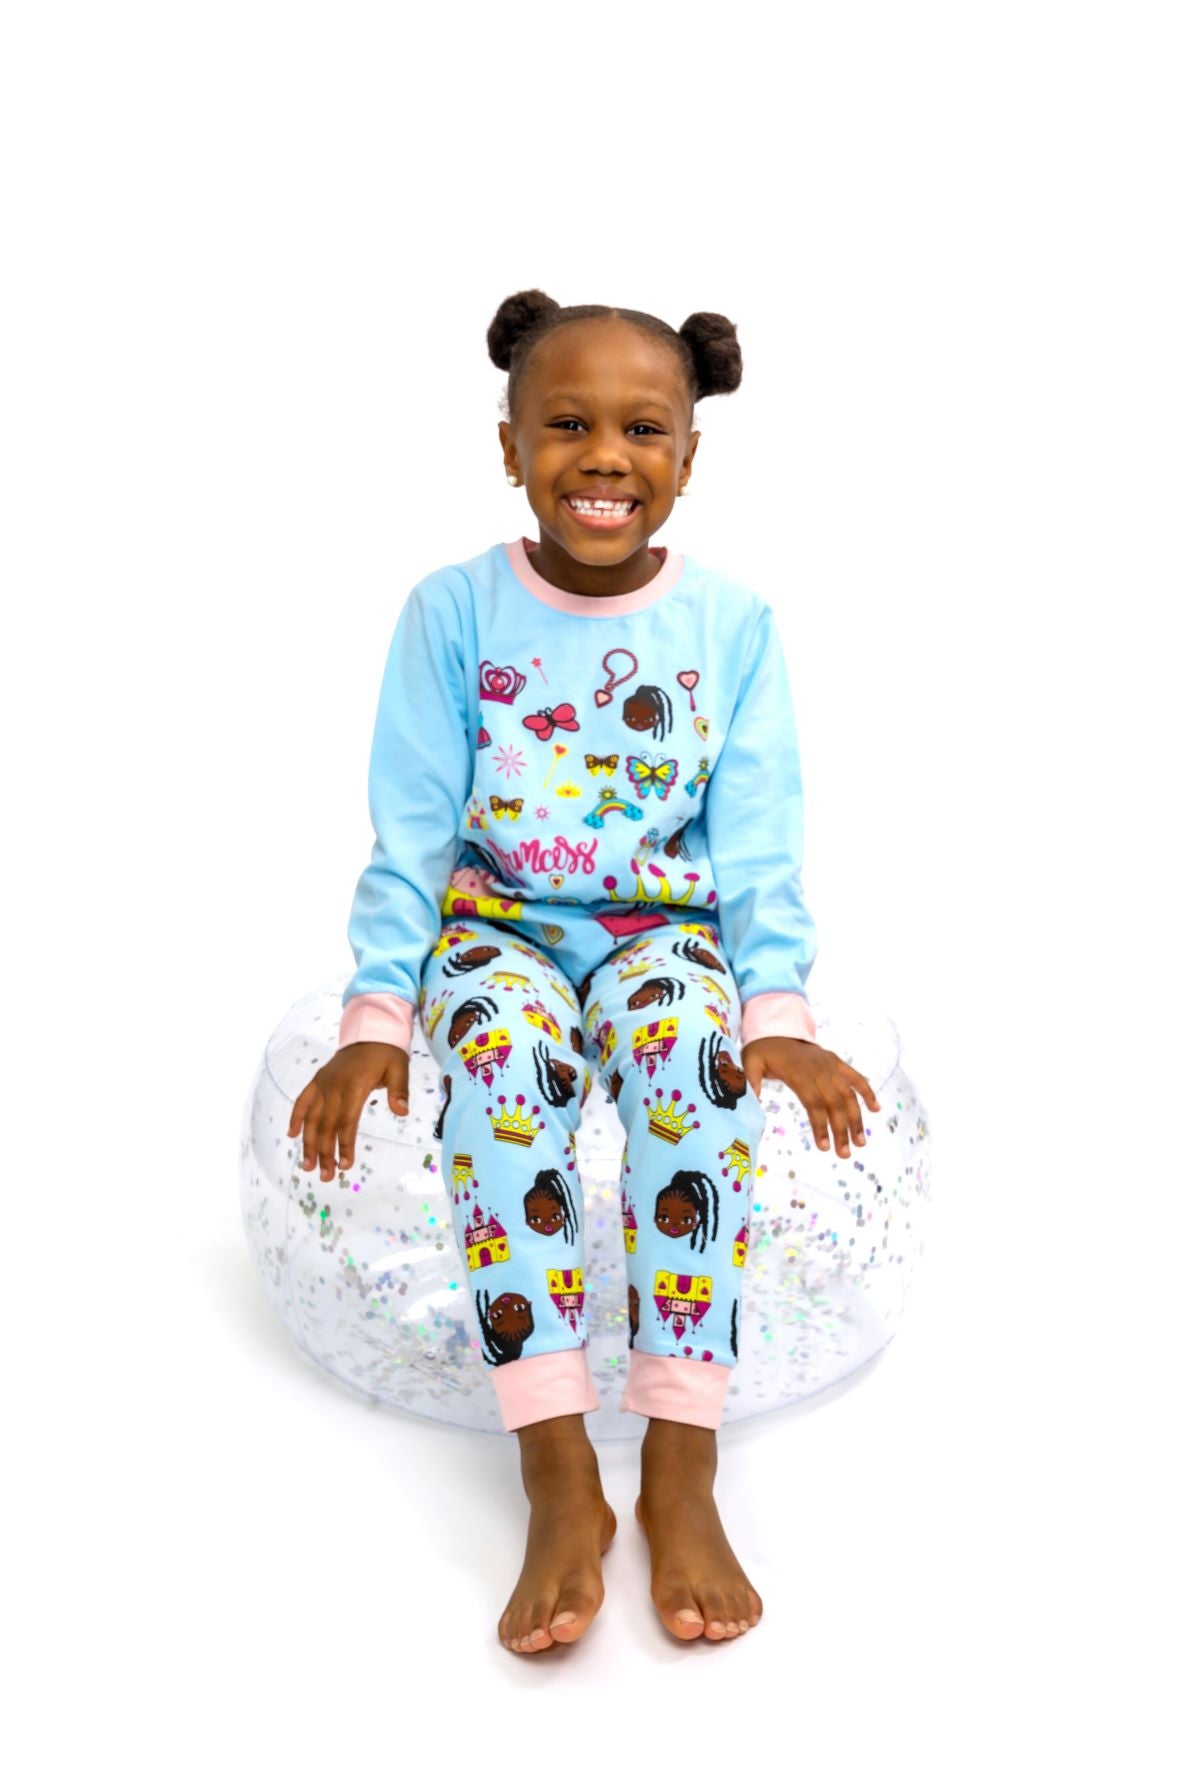 Princess Castle Long Sleeve Girl 2PC Pajama Set